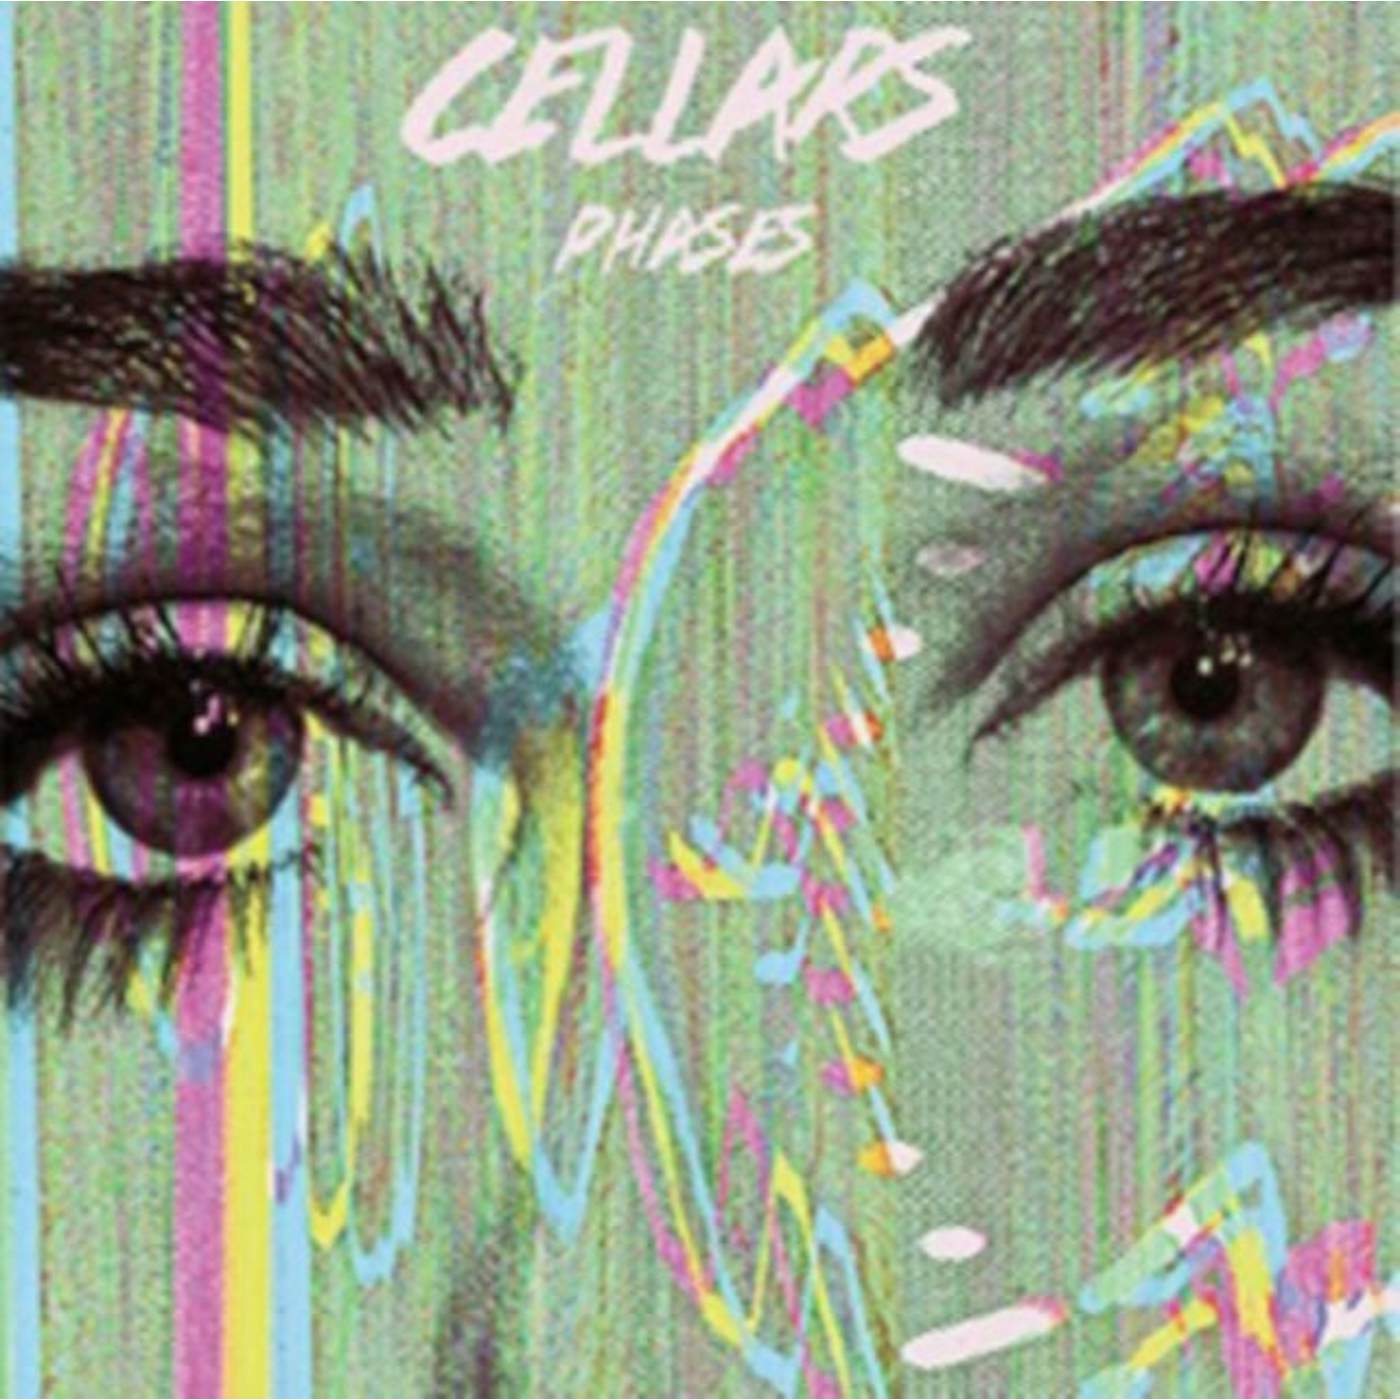 Cellars LP - Phases (Vinyl)